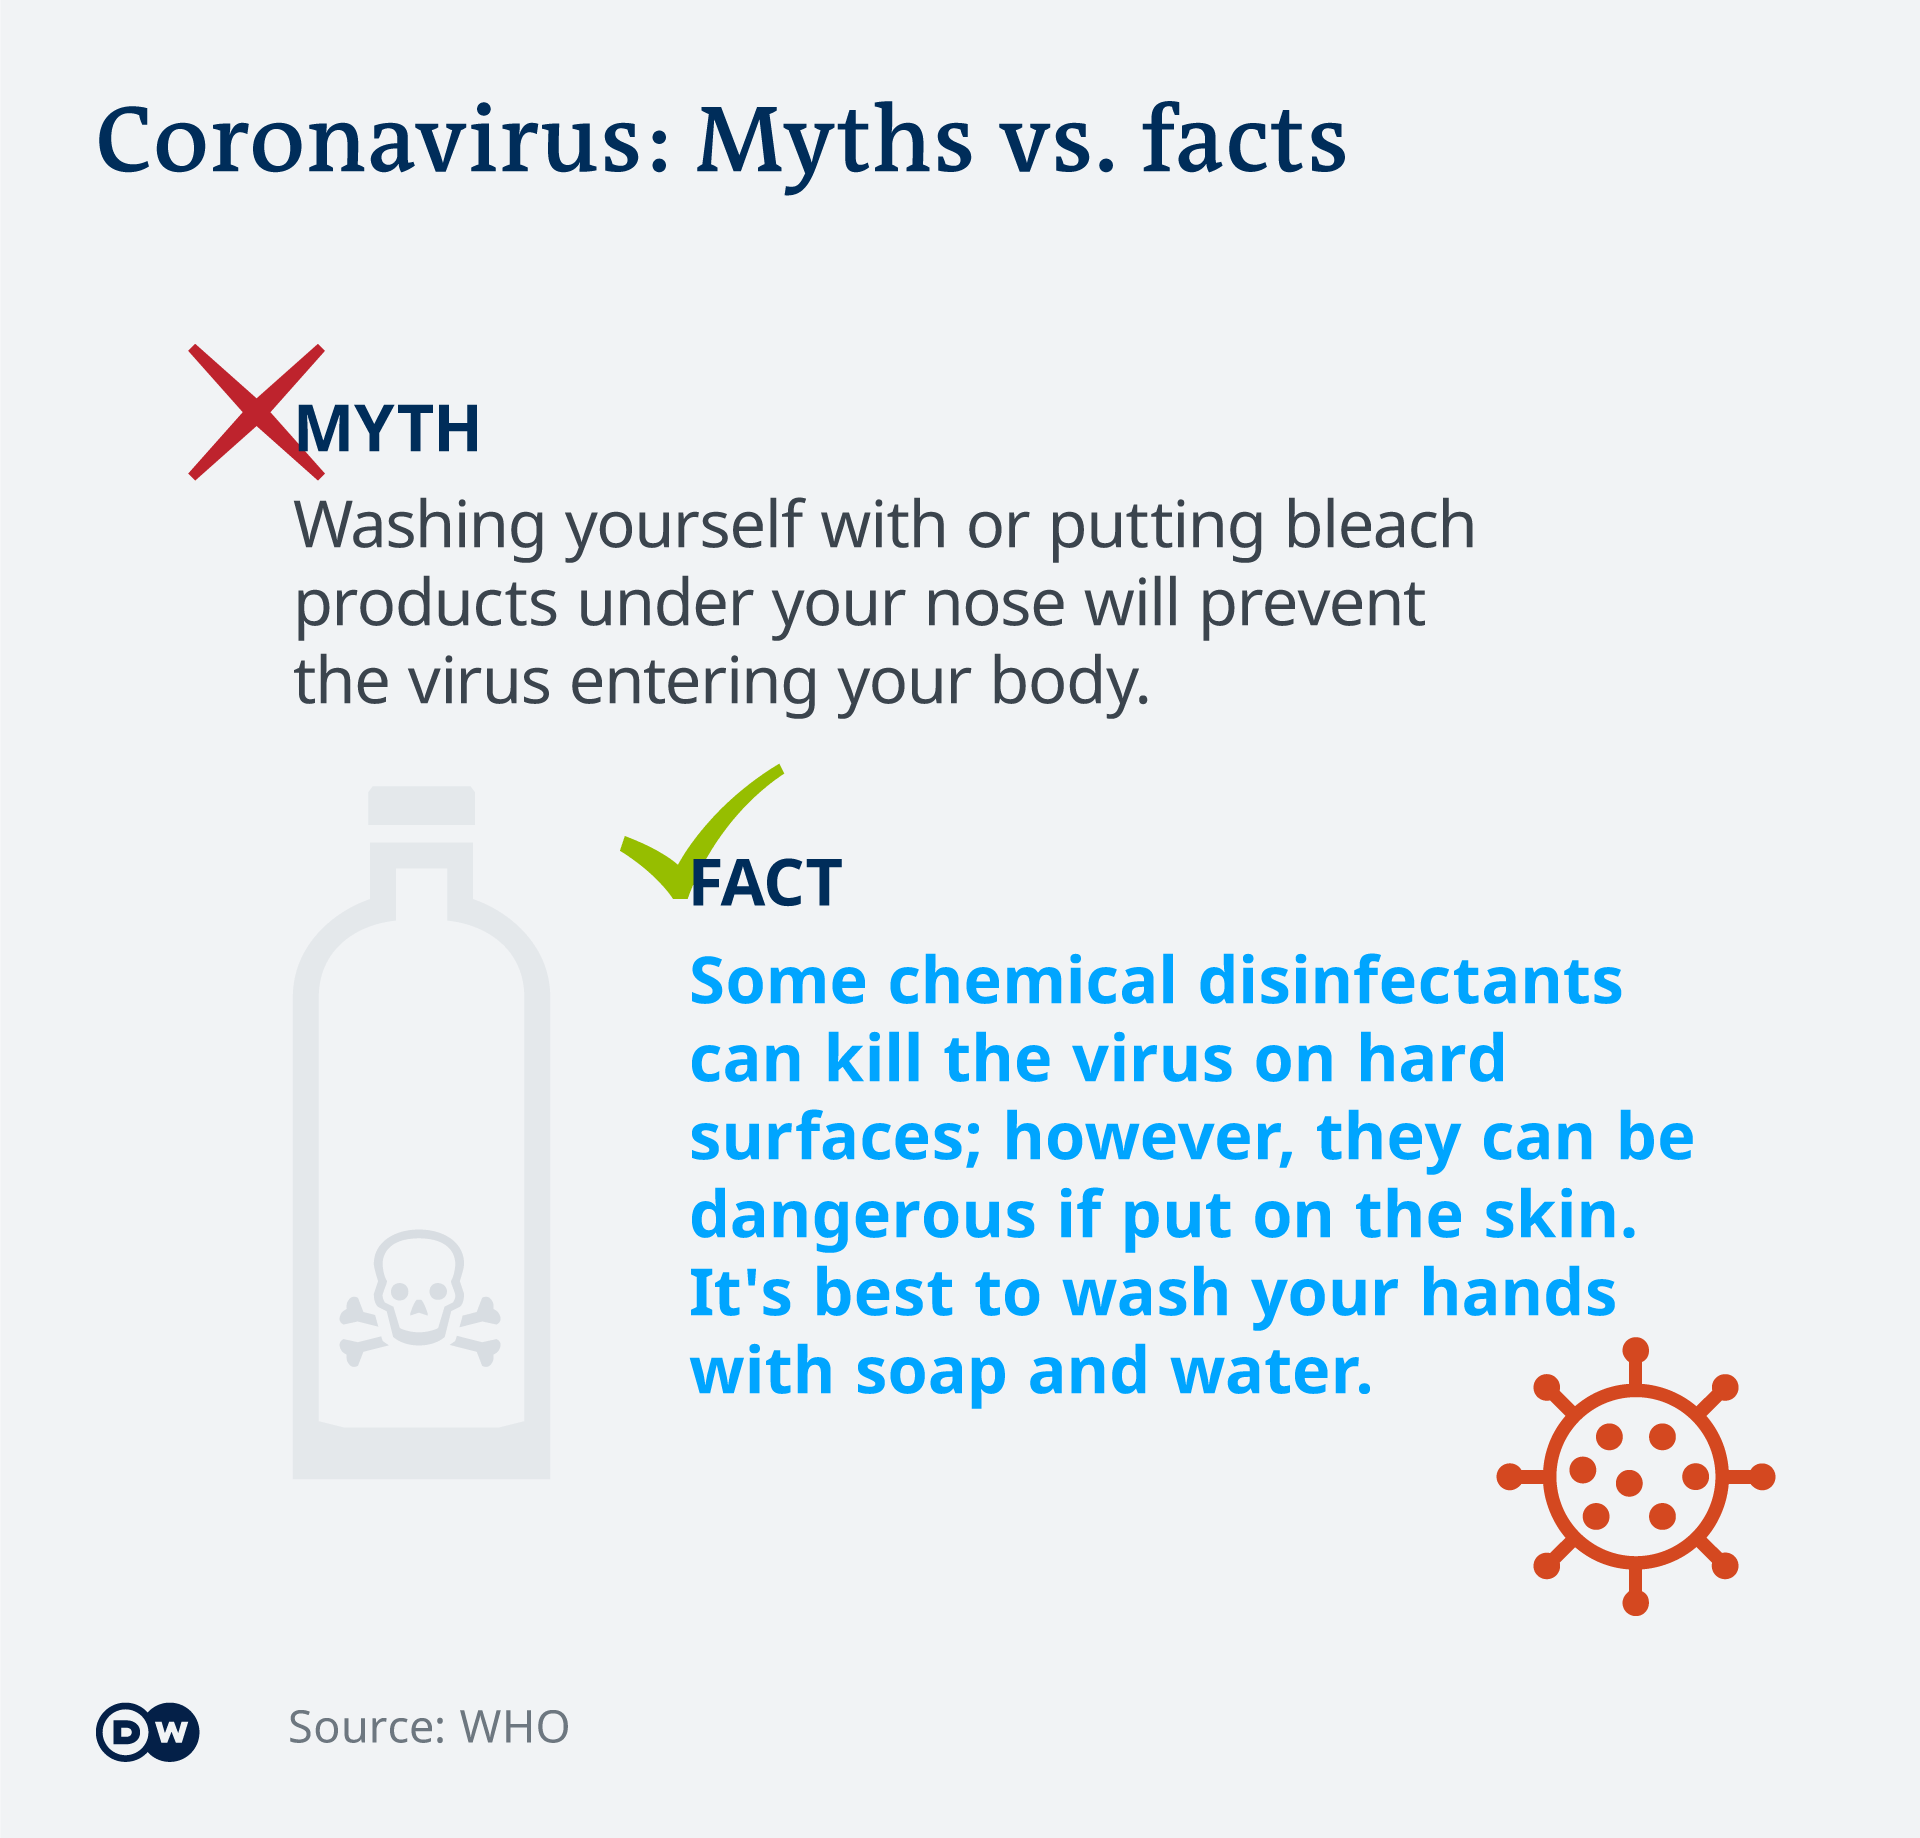 An infographic showing a myth surrounding coronavirus